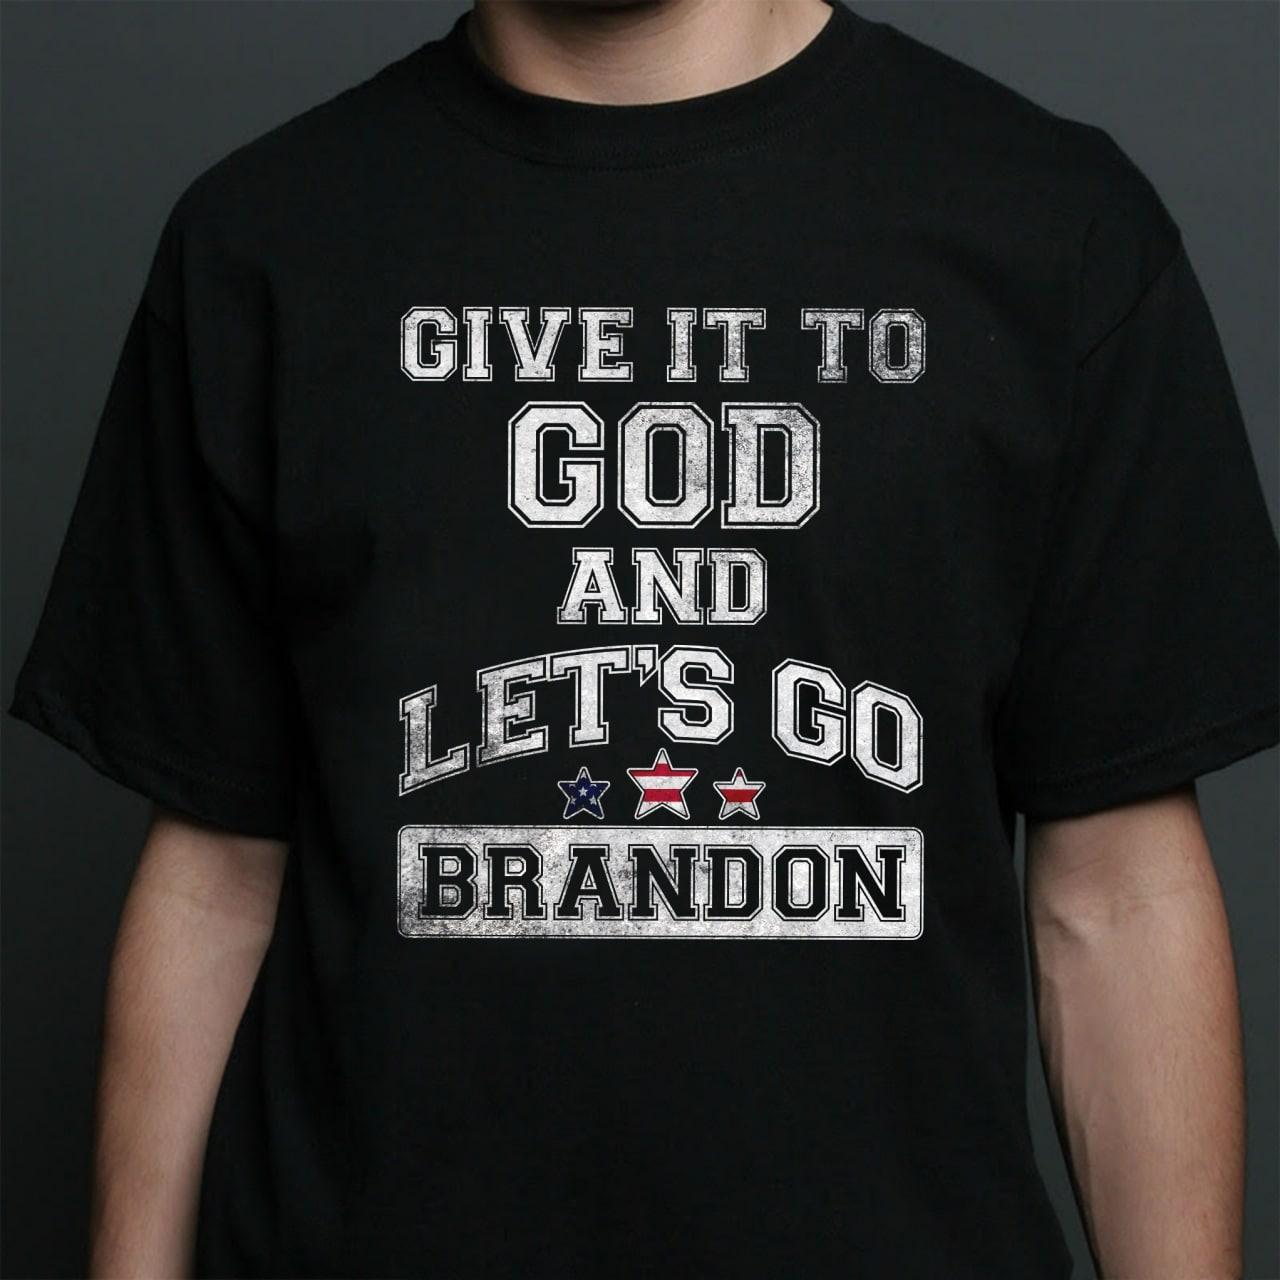 Give it to God and let's go Brandon - America nation under God, Fuck Joe Biden